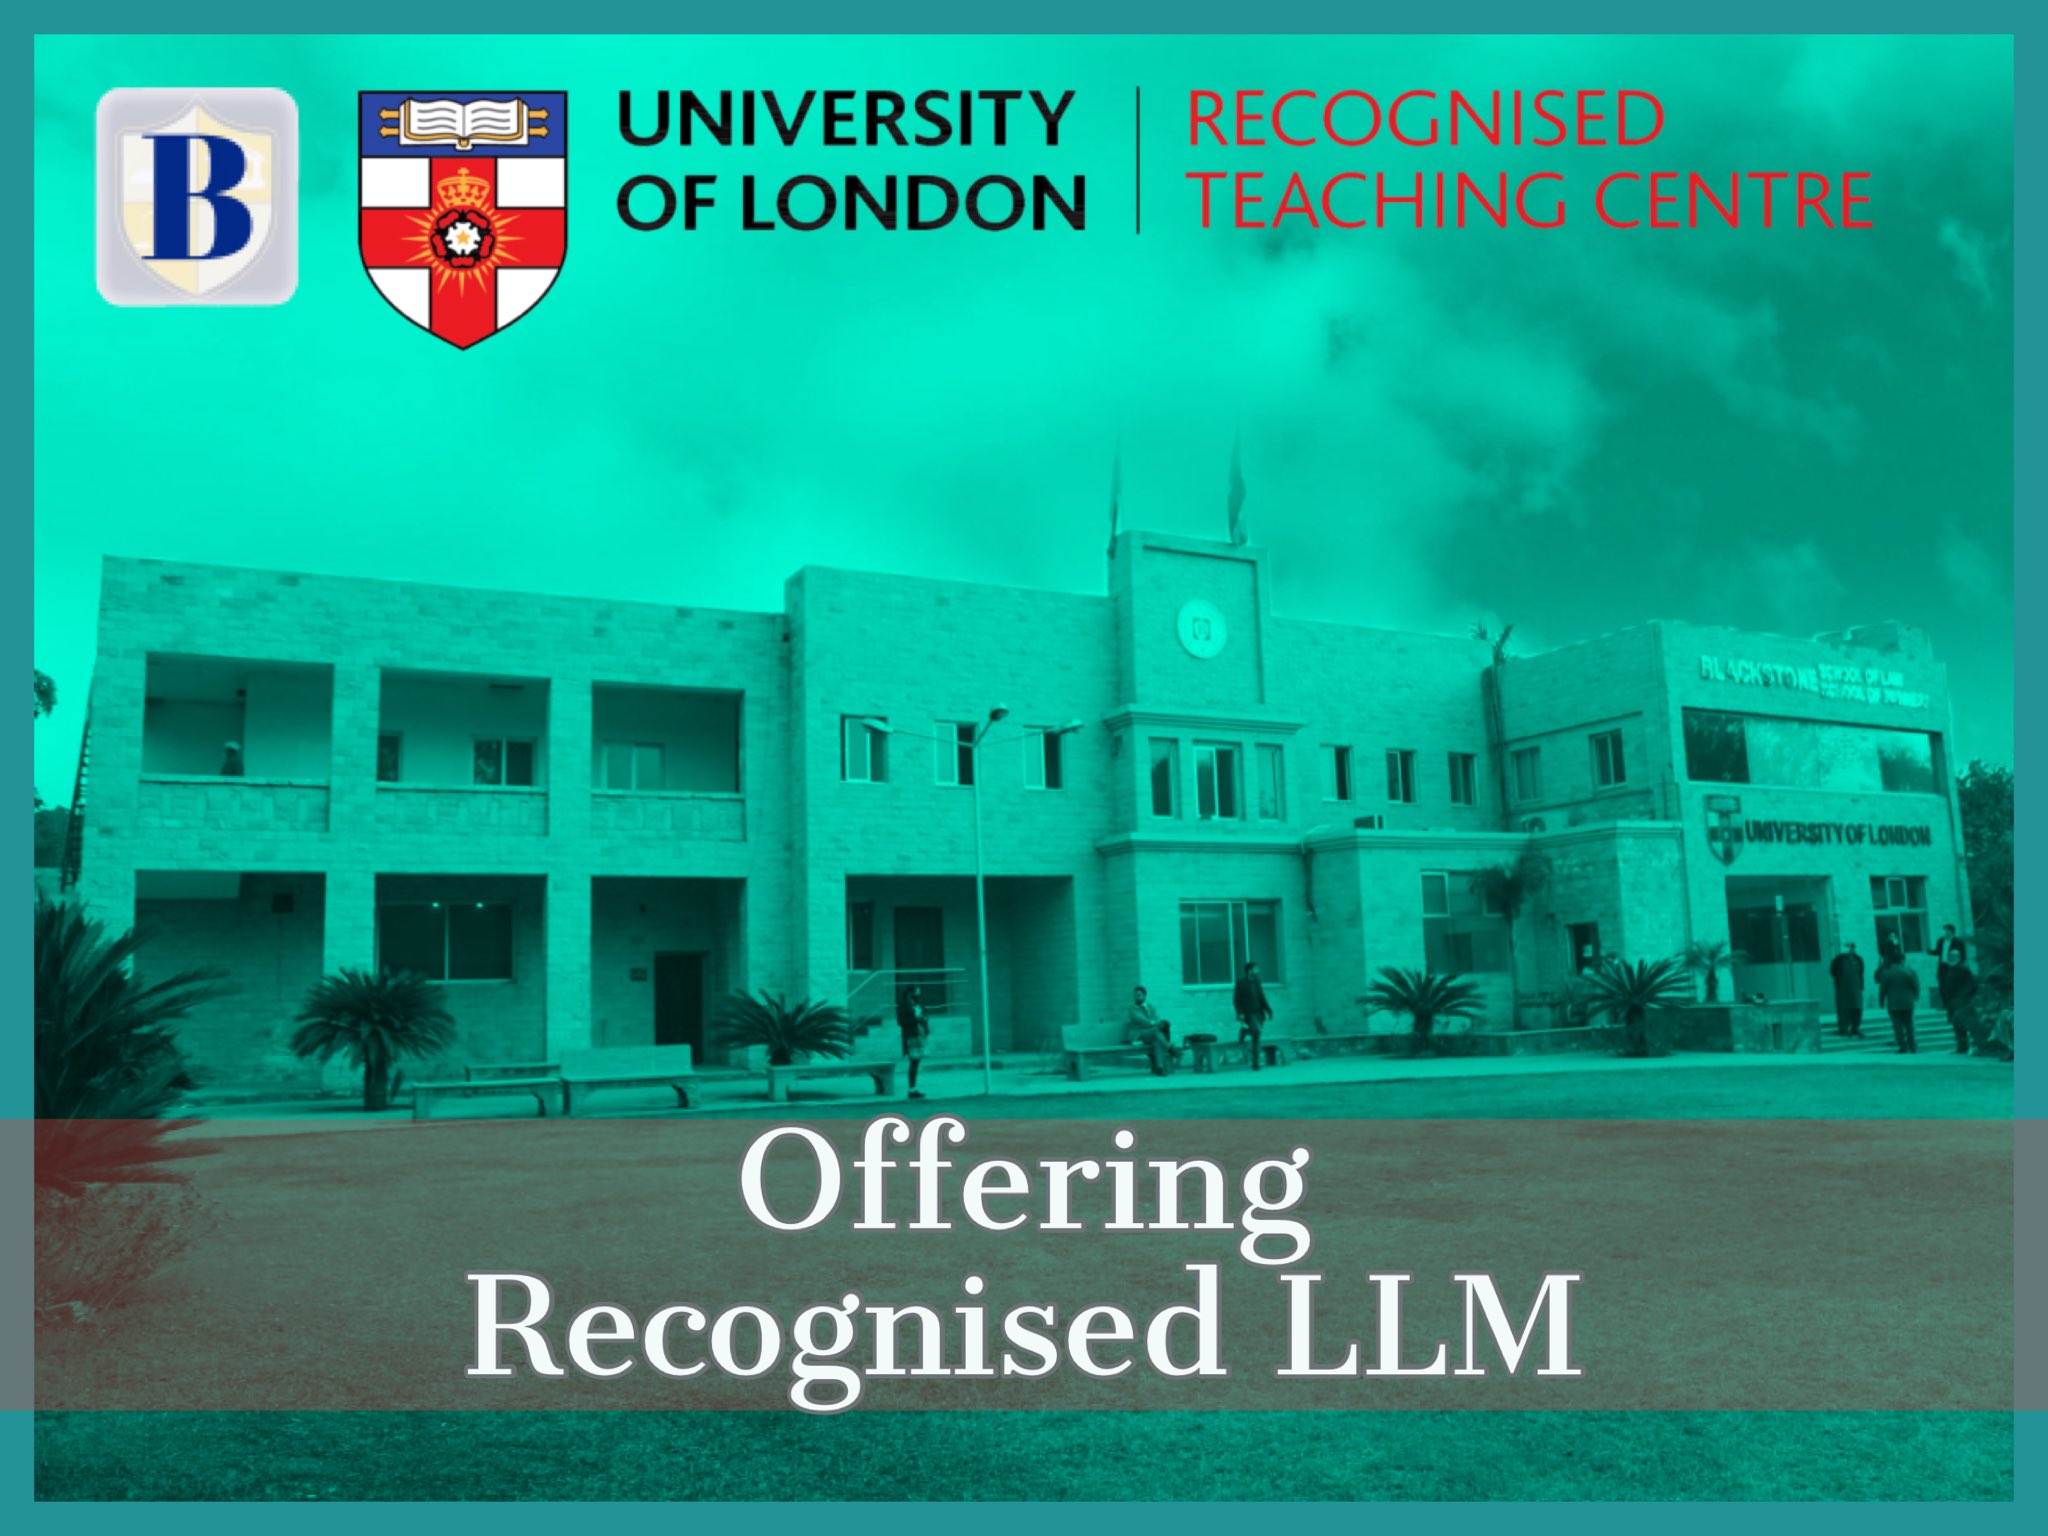 University of London – Recognized Teaching Centre